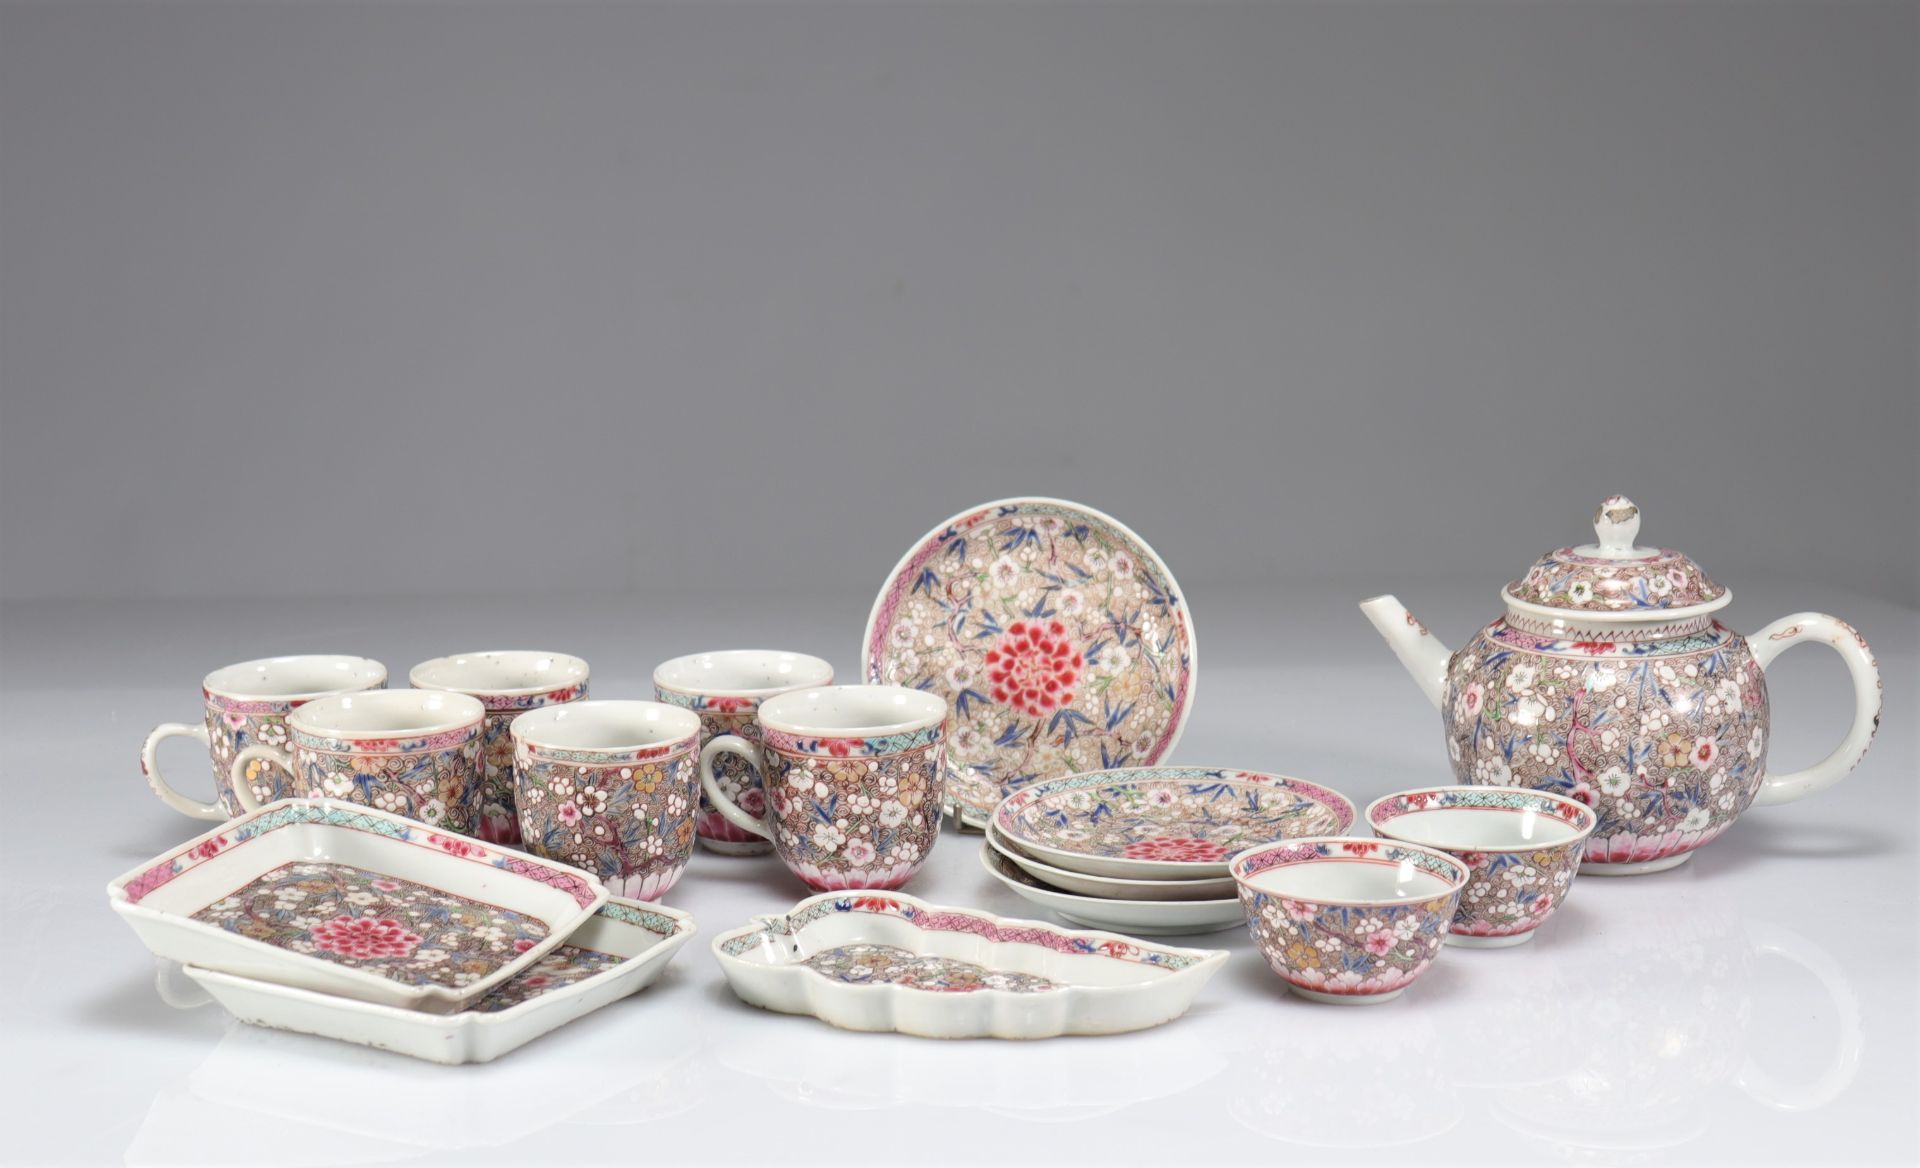 18th century famille rose porcelain tea service (16p) - Image 2 of 4